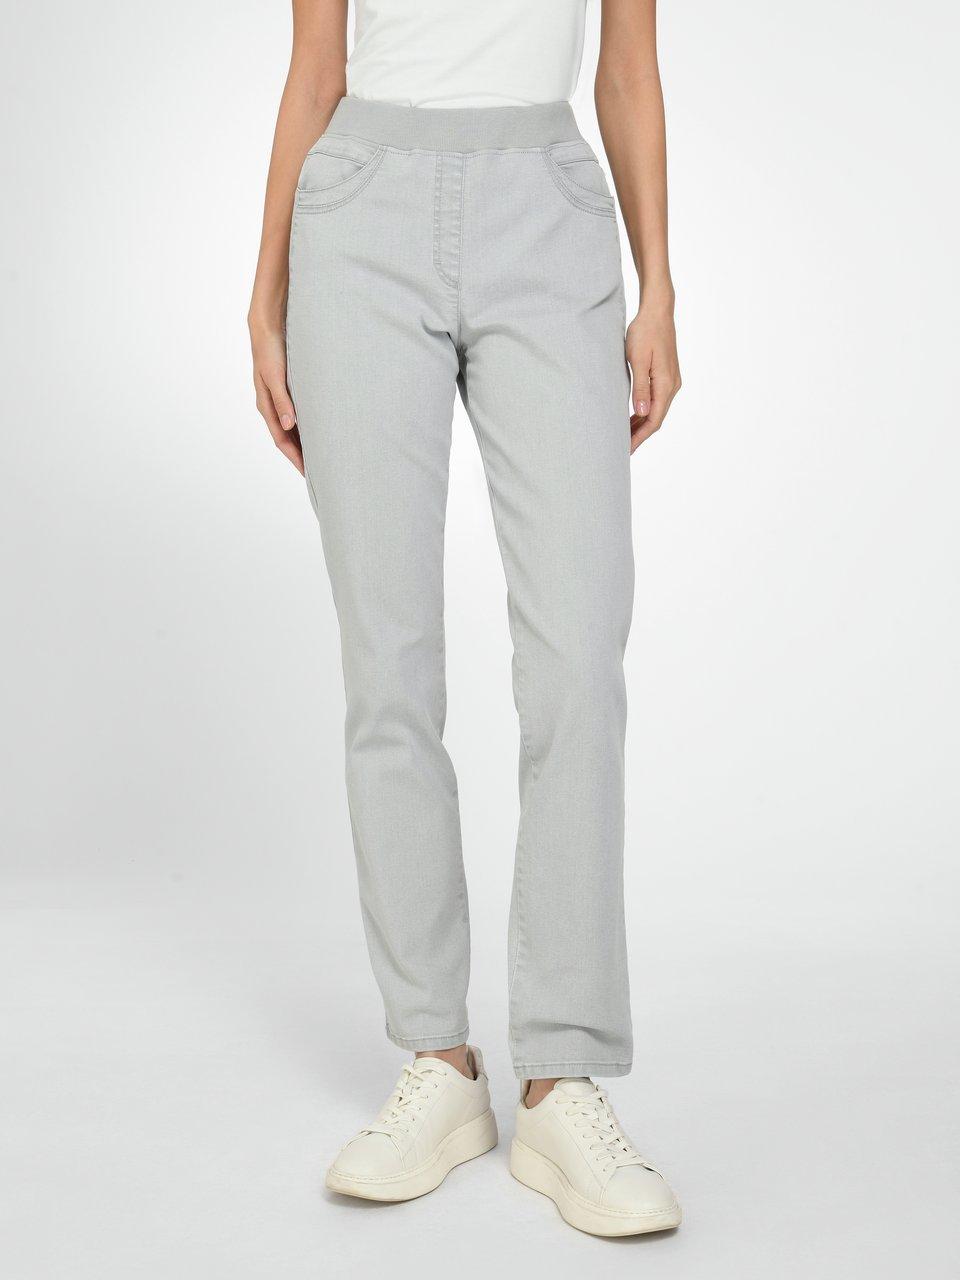 Ashley Furman Bedenk Transparant Raphaela by Brax - ProForm Slim-jeans model Pamina Fun - grey-denim